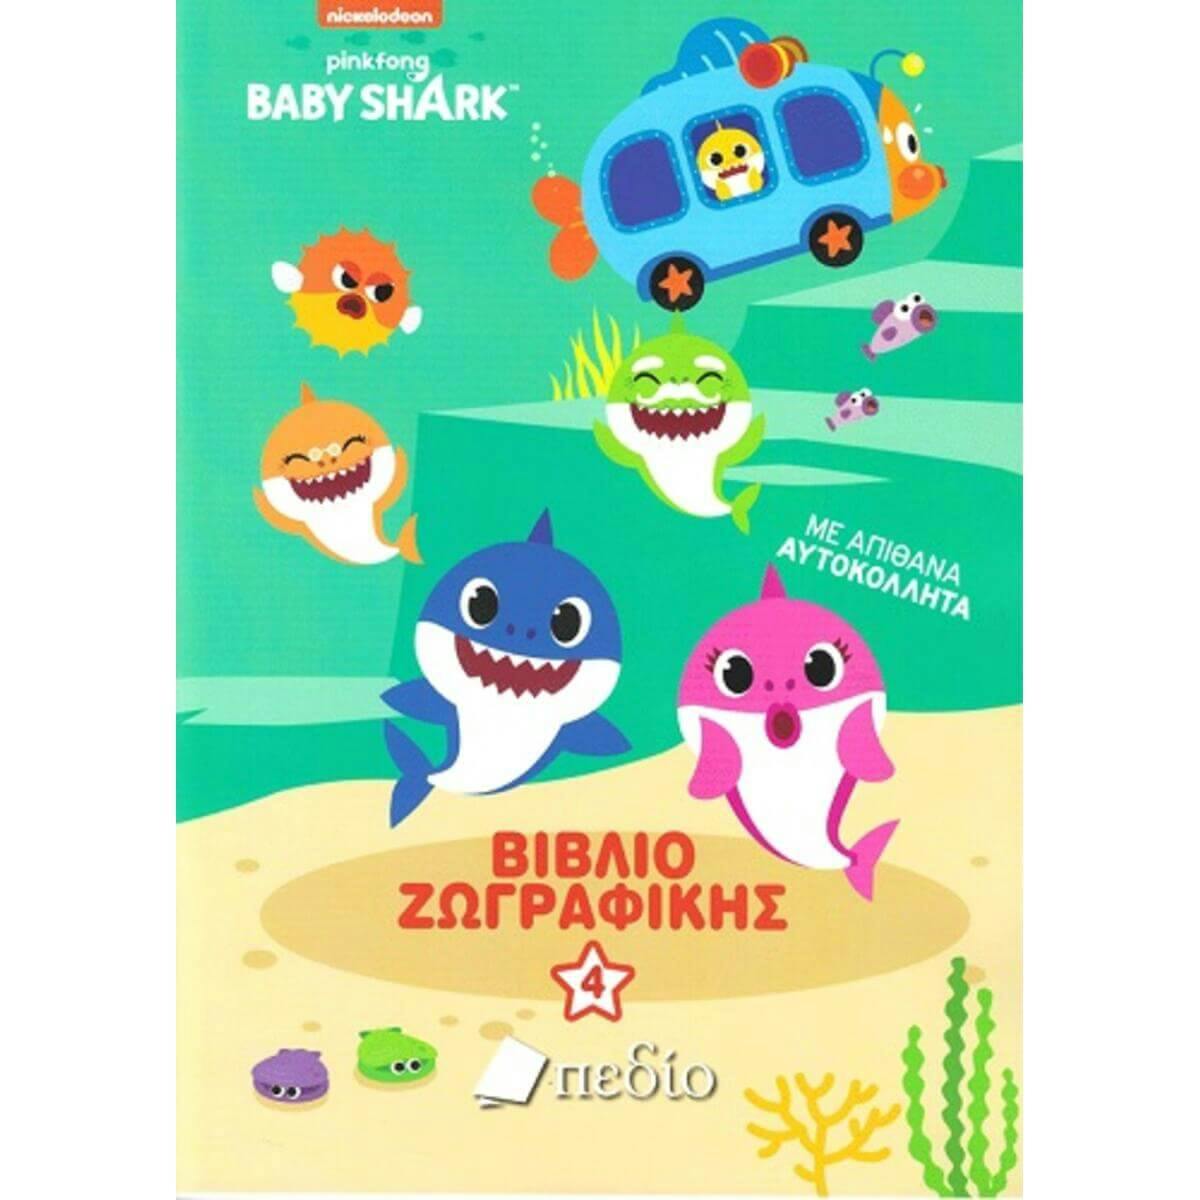 Baby Shark Βιβλίο Ζωγραφικής 4 Pinkfong Nickelodeon  με Απίθανα Αυτοκόλλητα   934924